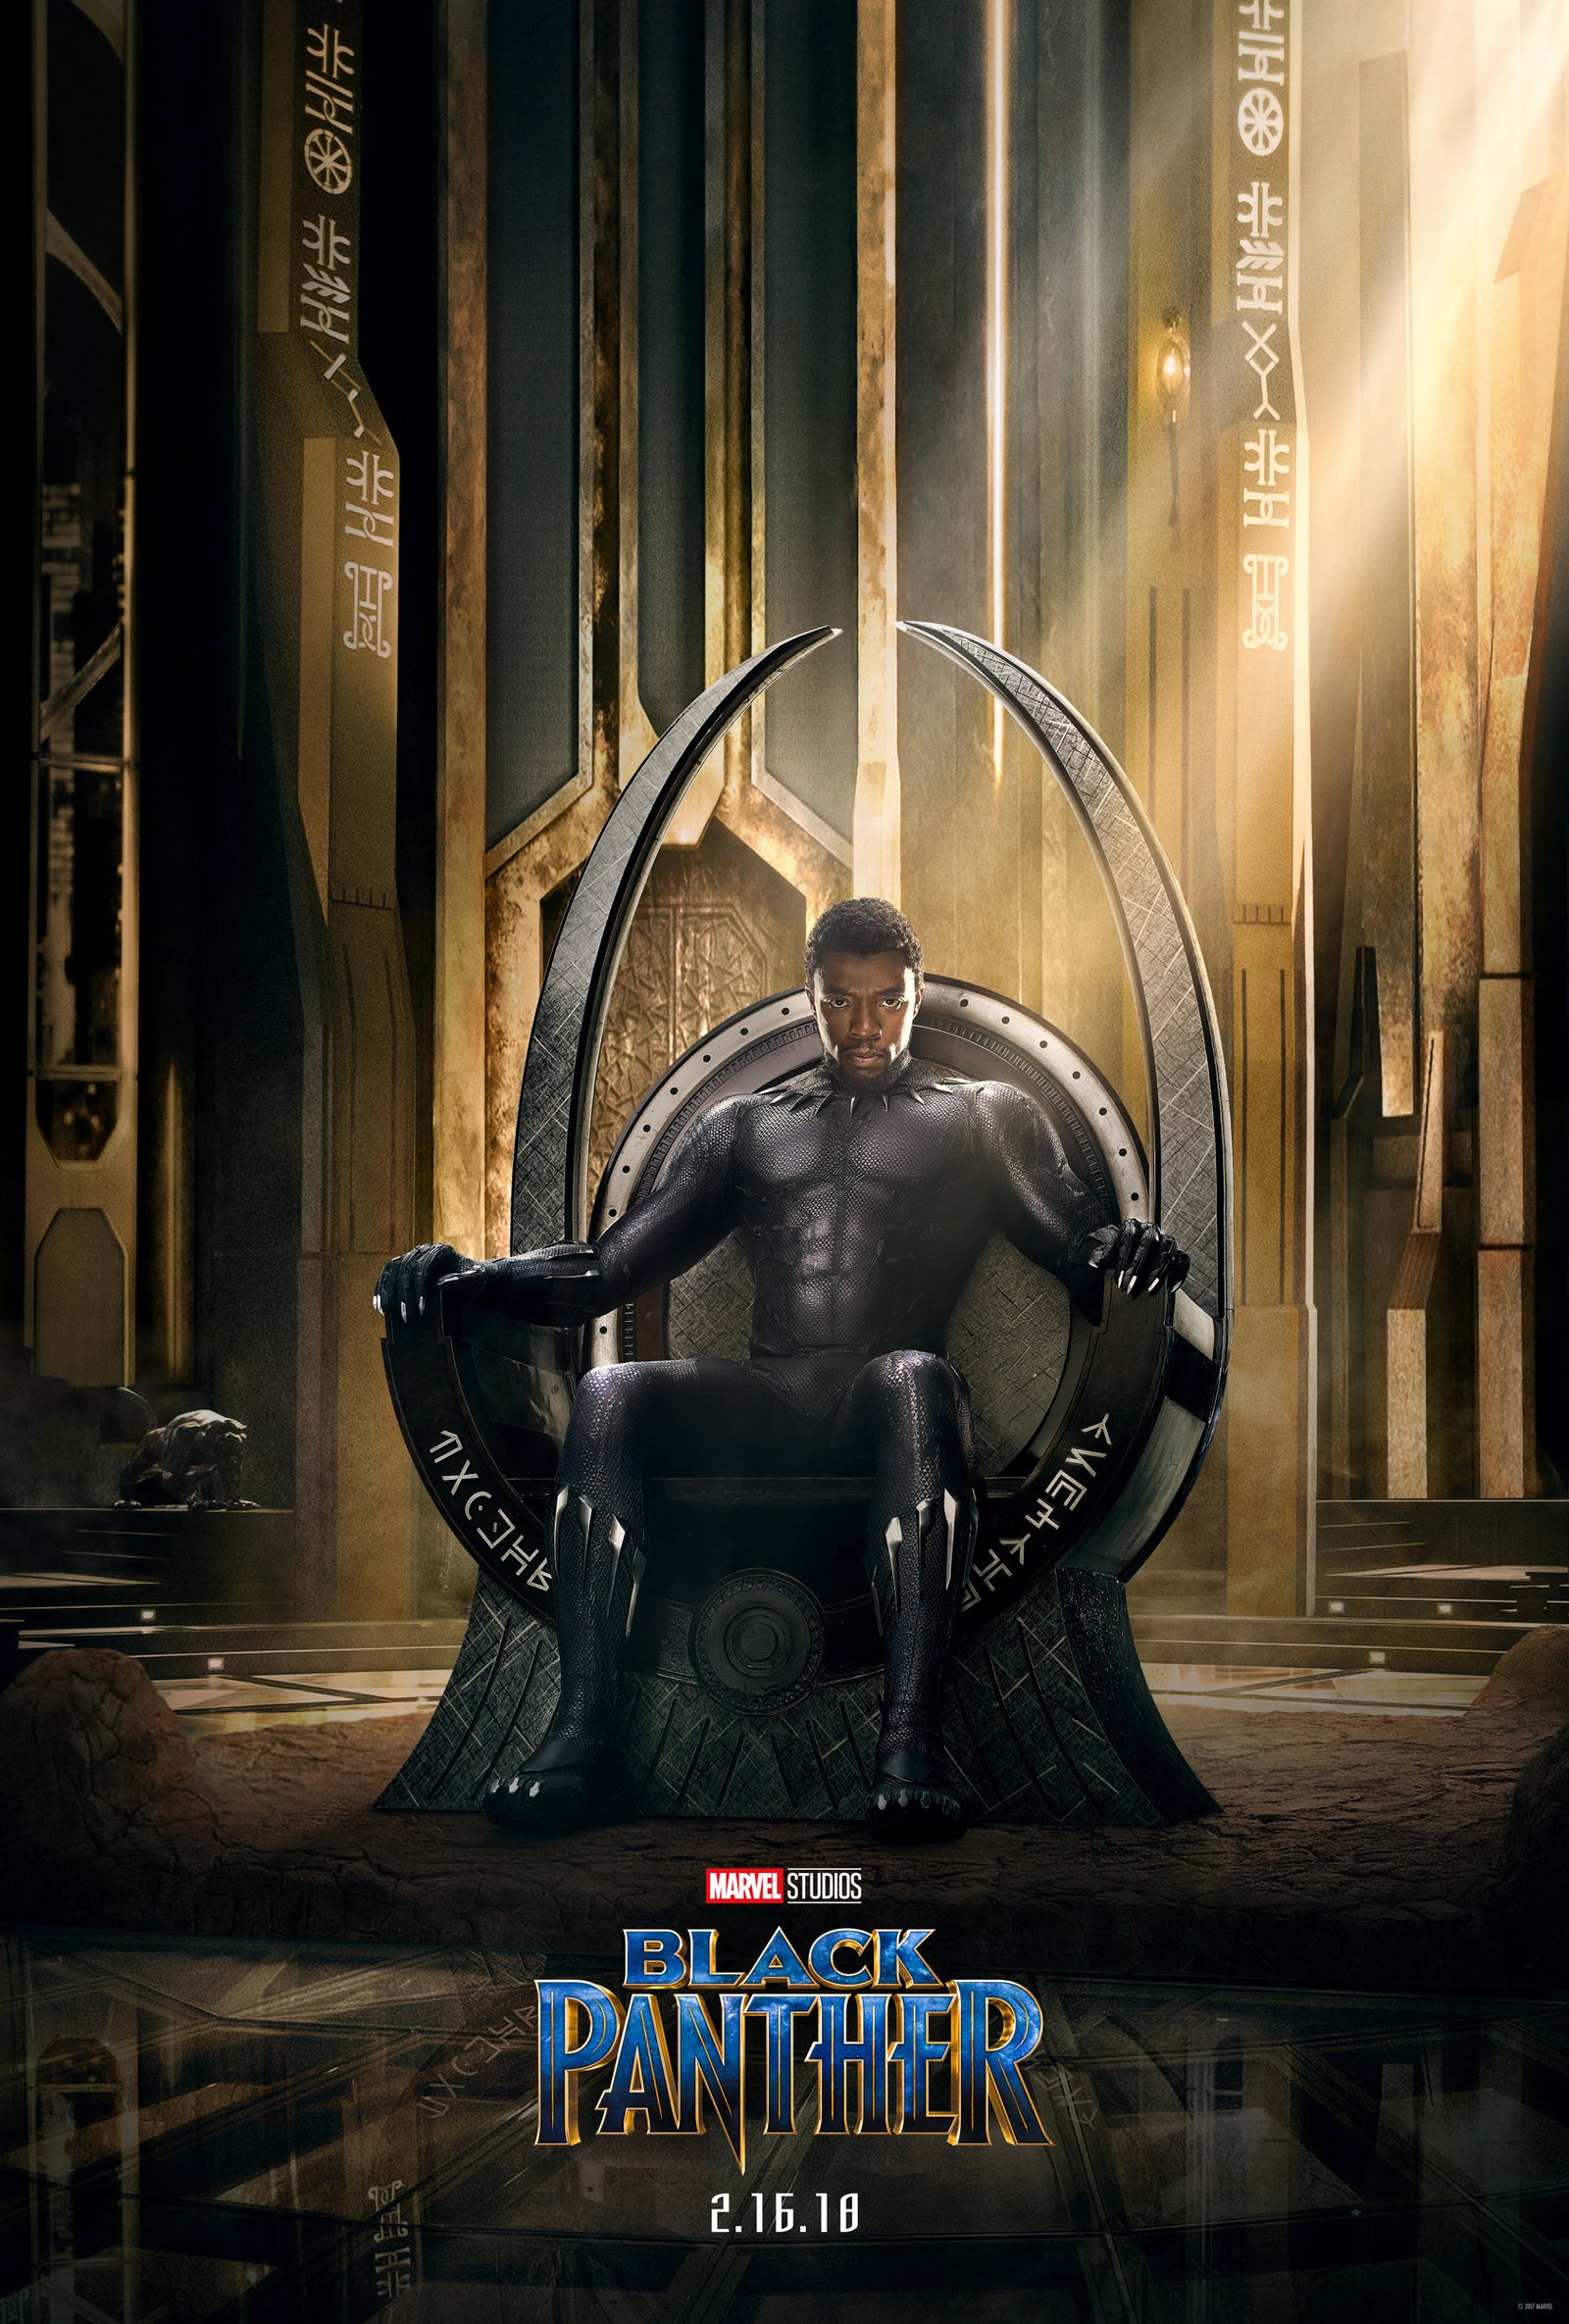 Black Panther teaser poster1688 x 2500